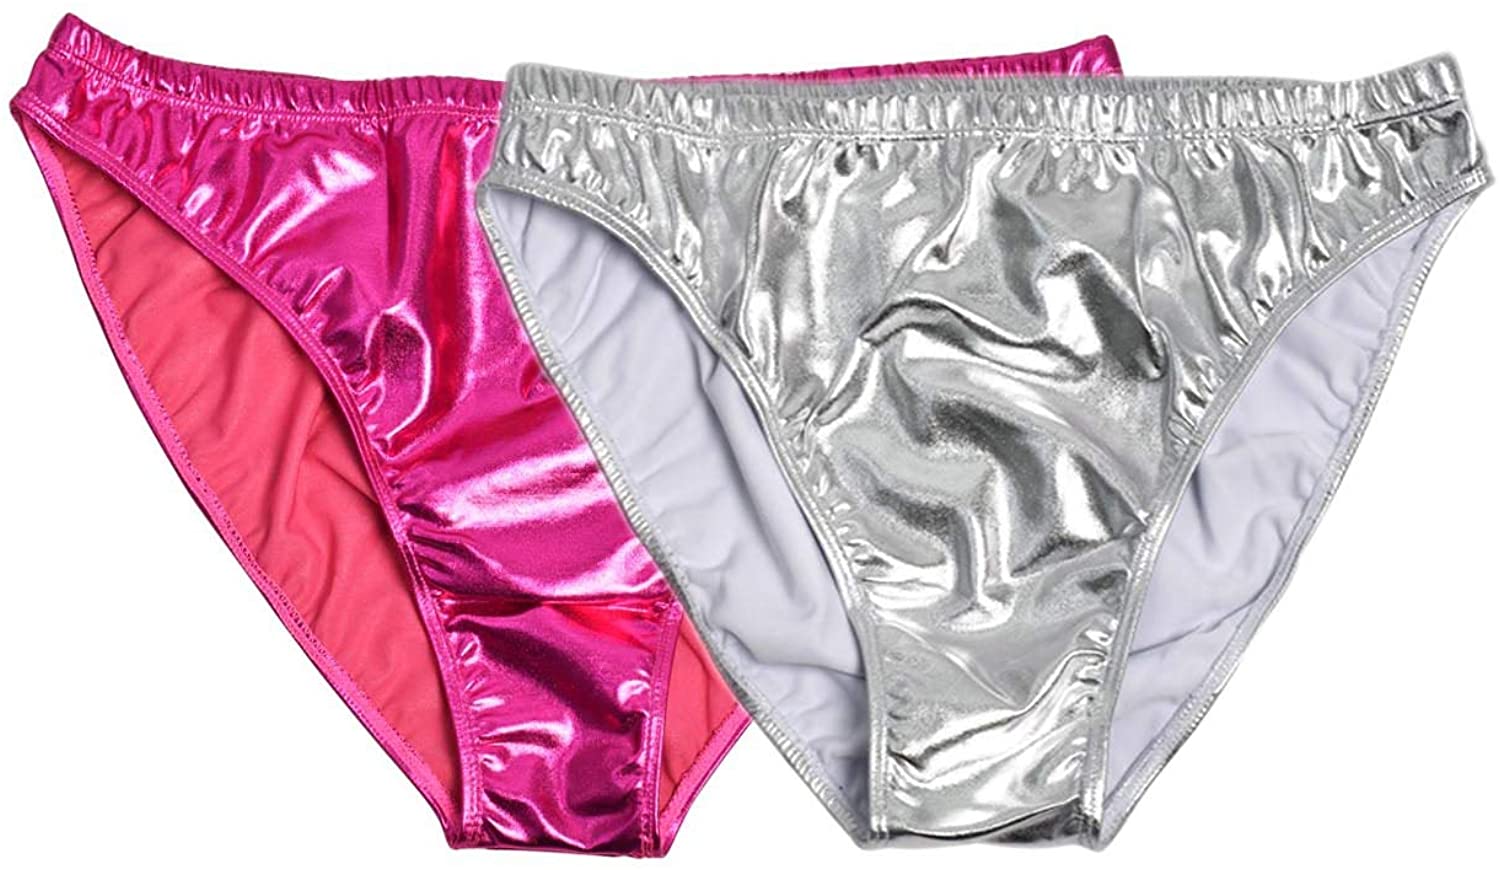 Kepblom Women Shiny Metallic Panty Briefs High Cut Ballet Dance Underwear  Shorts 